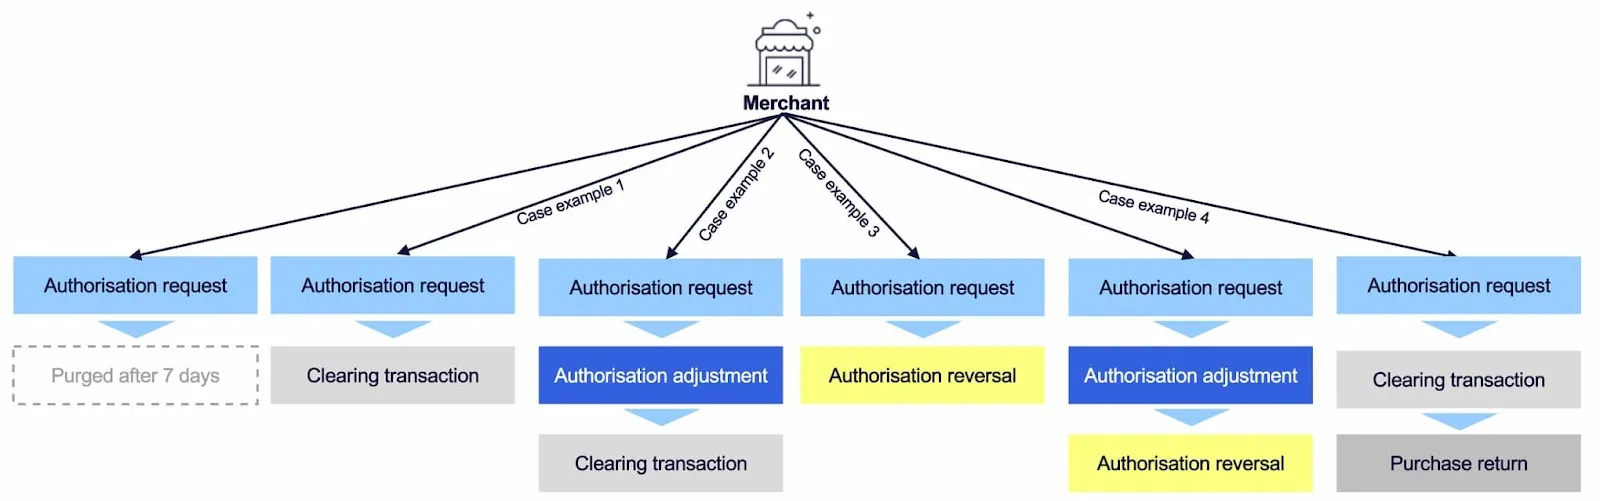 linking authorisation with transaction